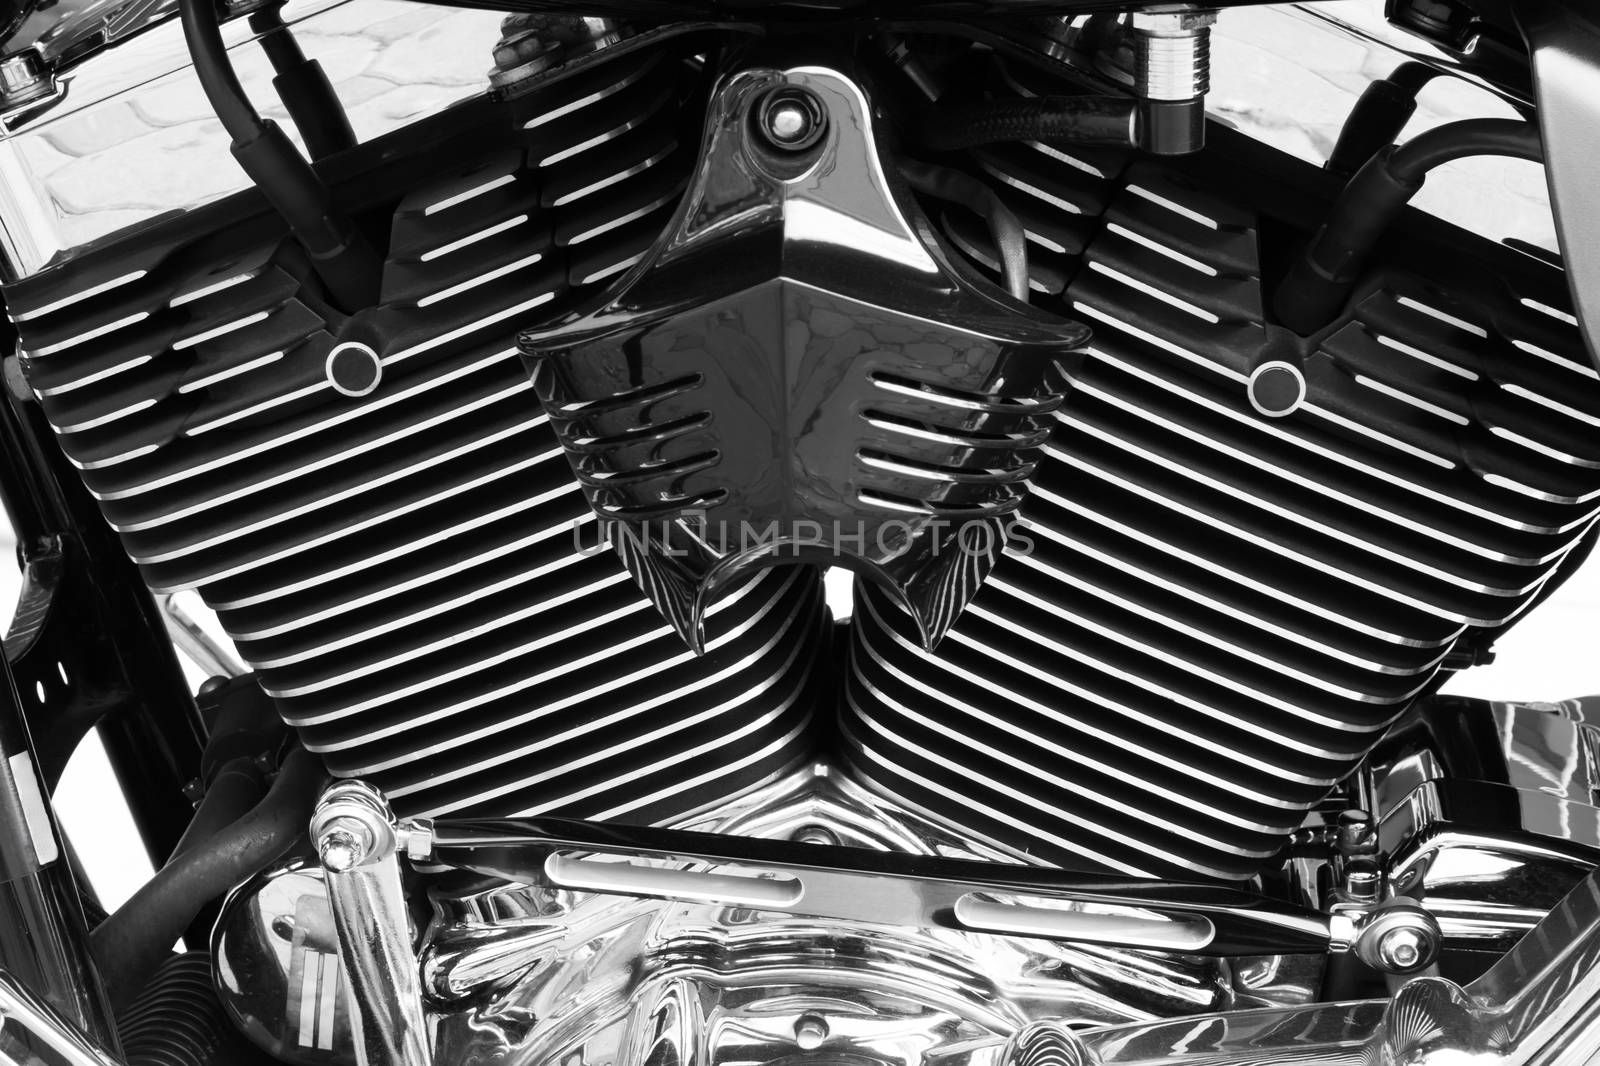 Motorbike's chromed engine black and white background